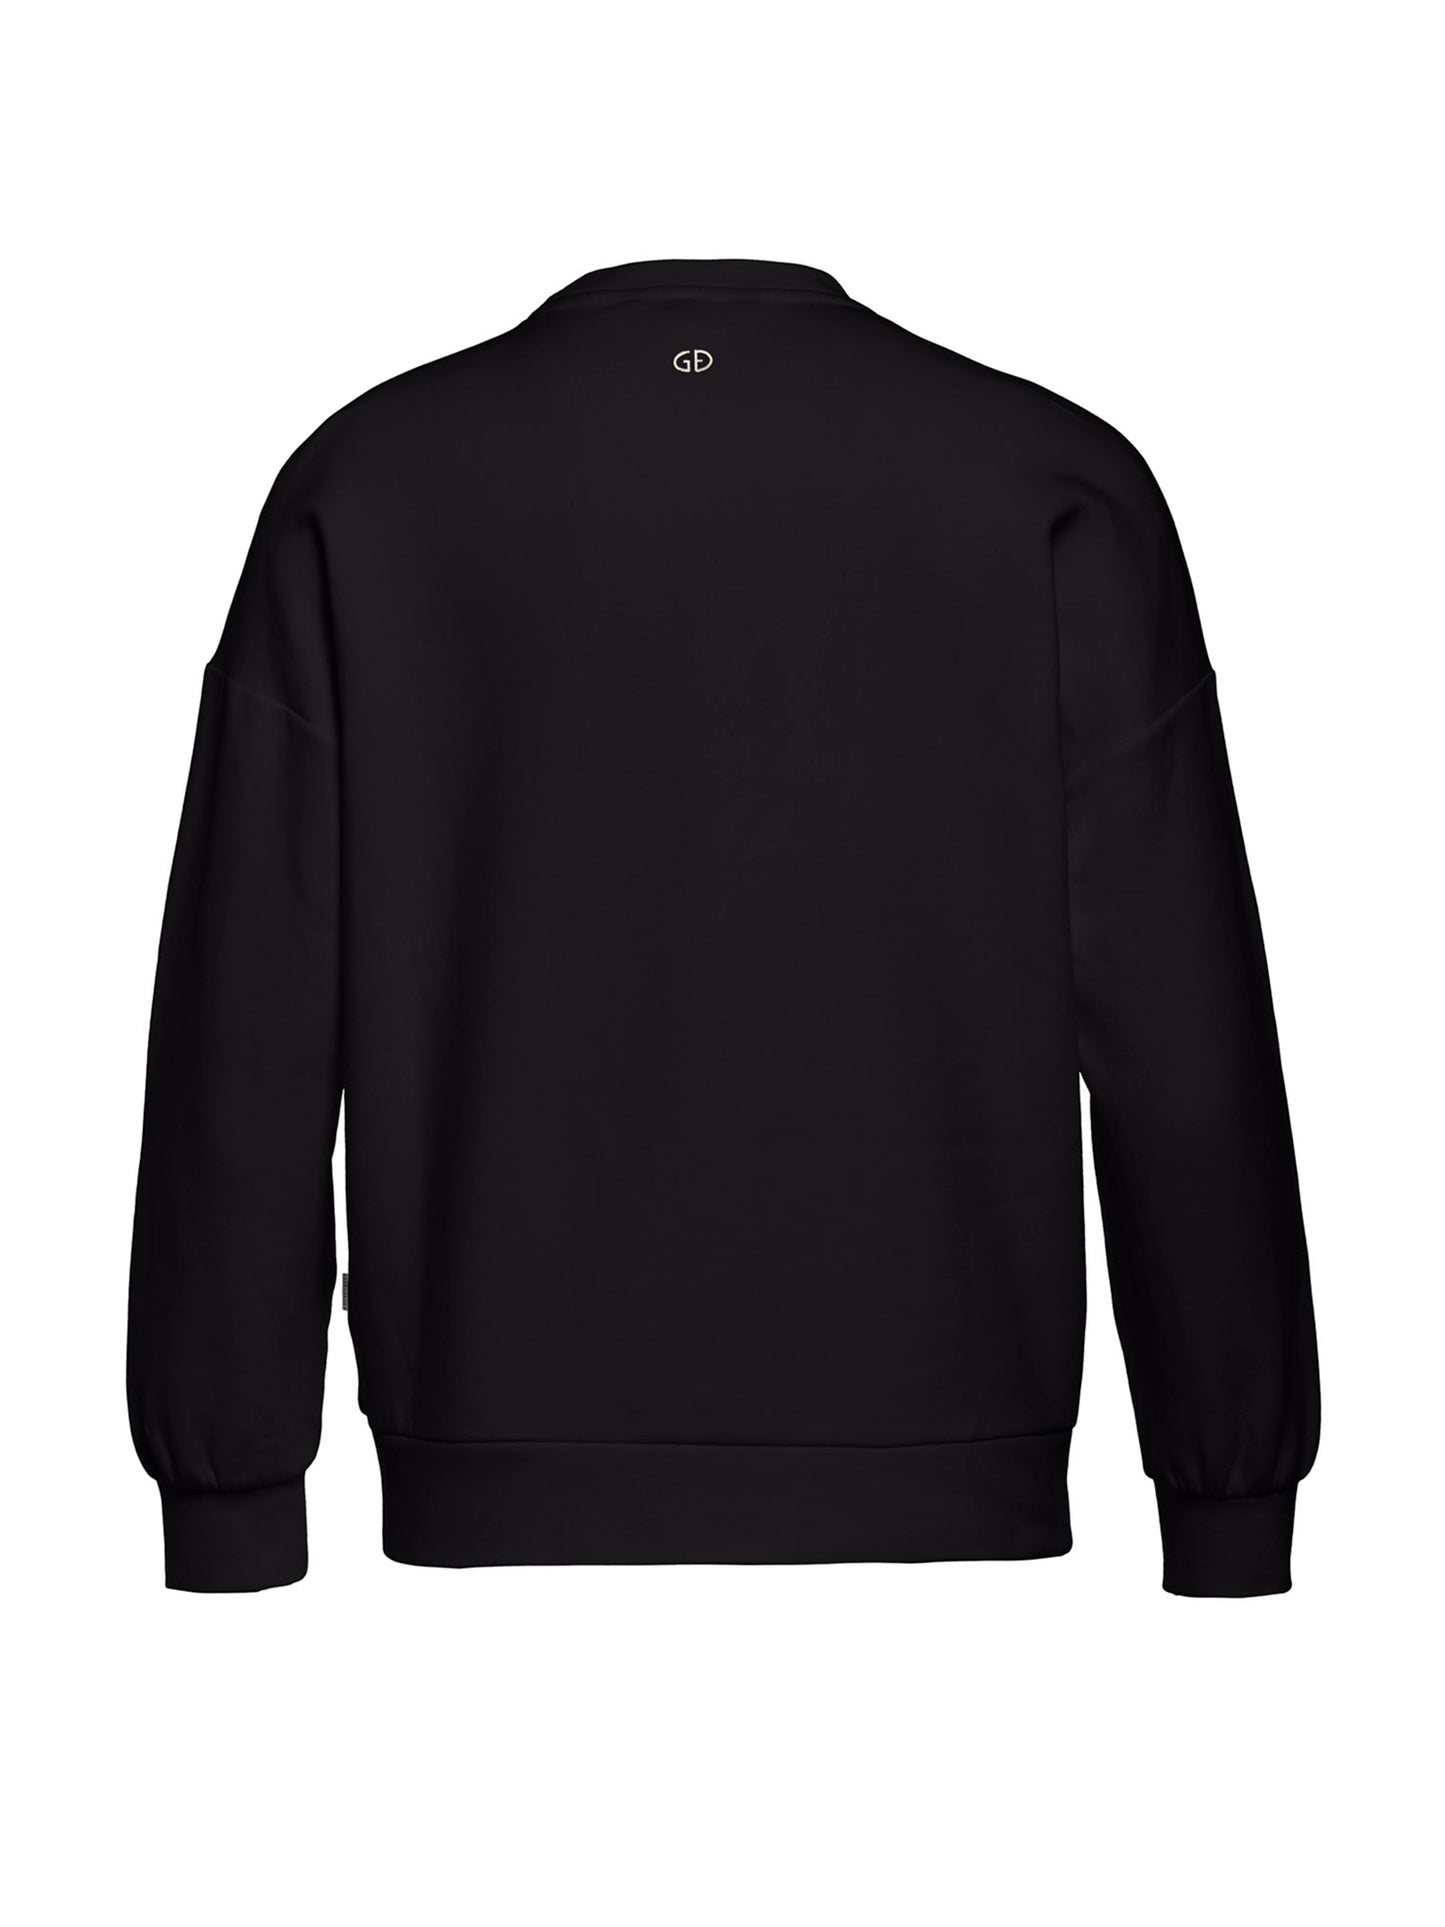 HAVEN sweater black